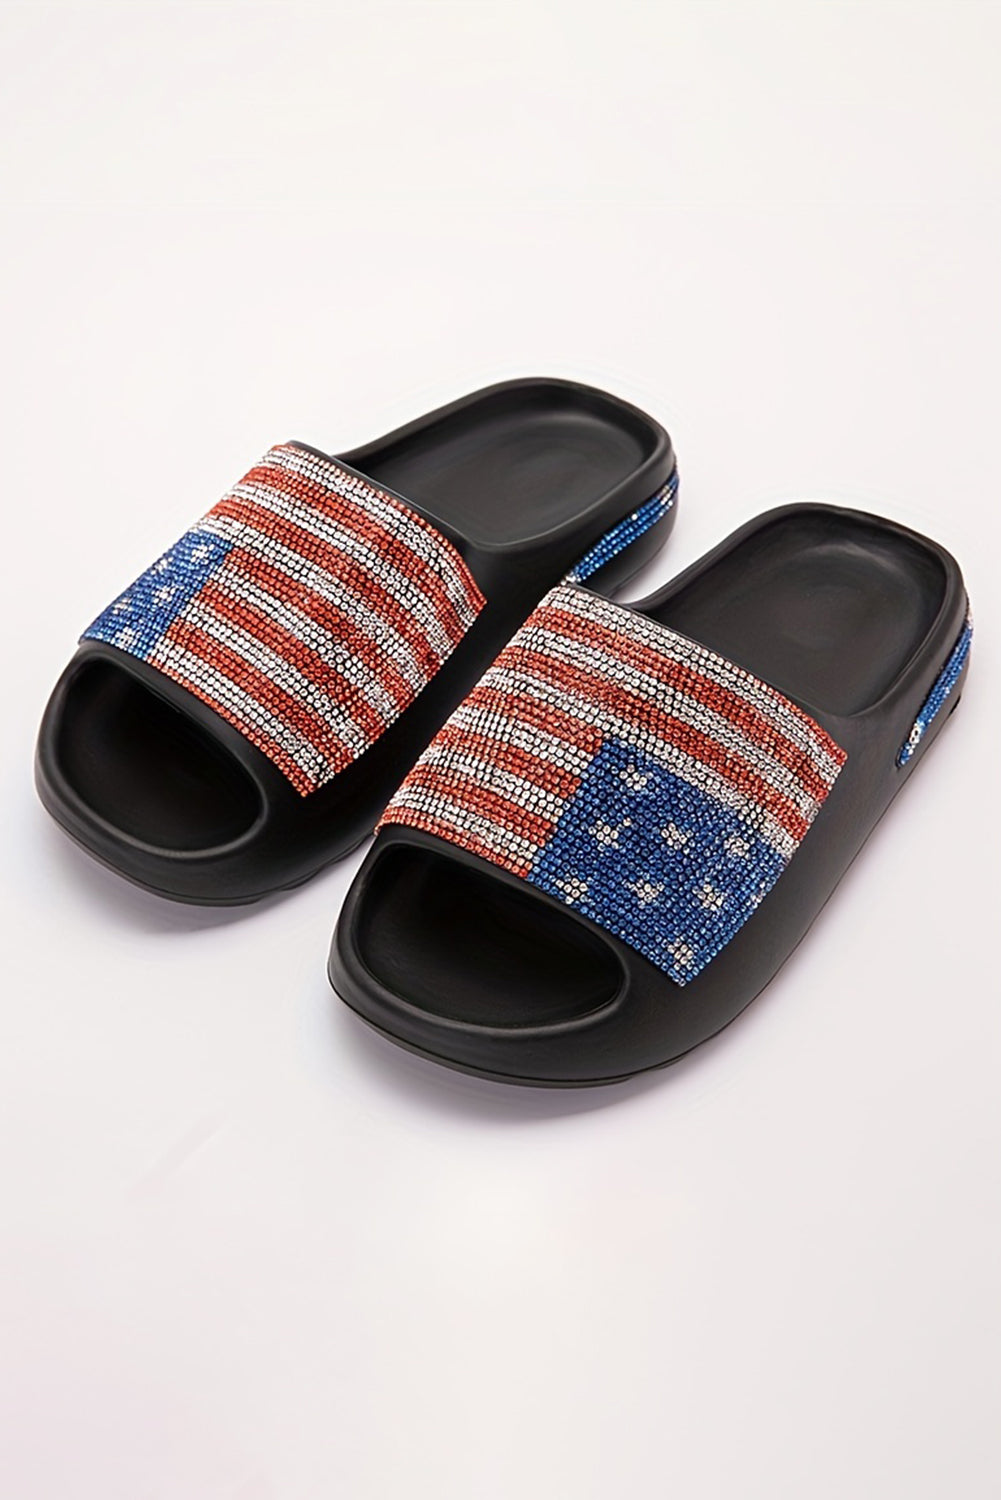 Black Rhinestone American Flag Thick Sole Slippers Slippers JT's Designer Fashion